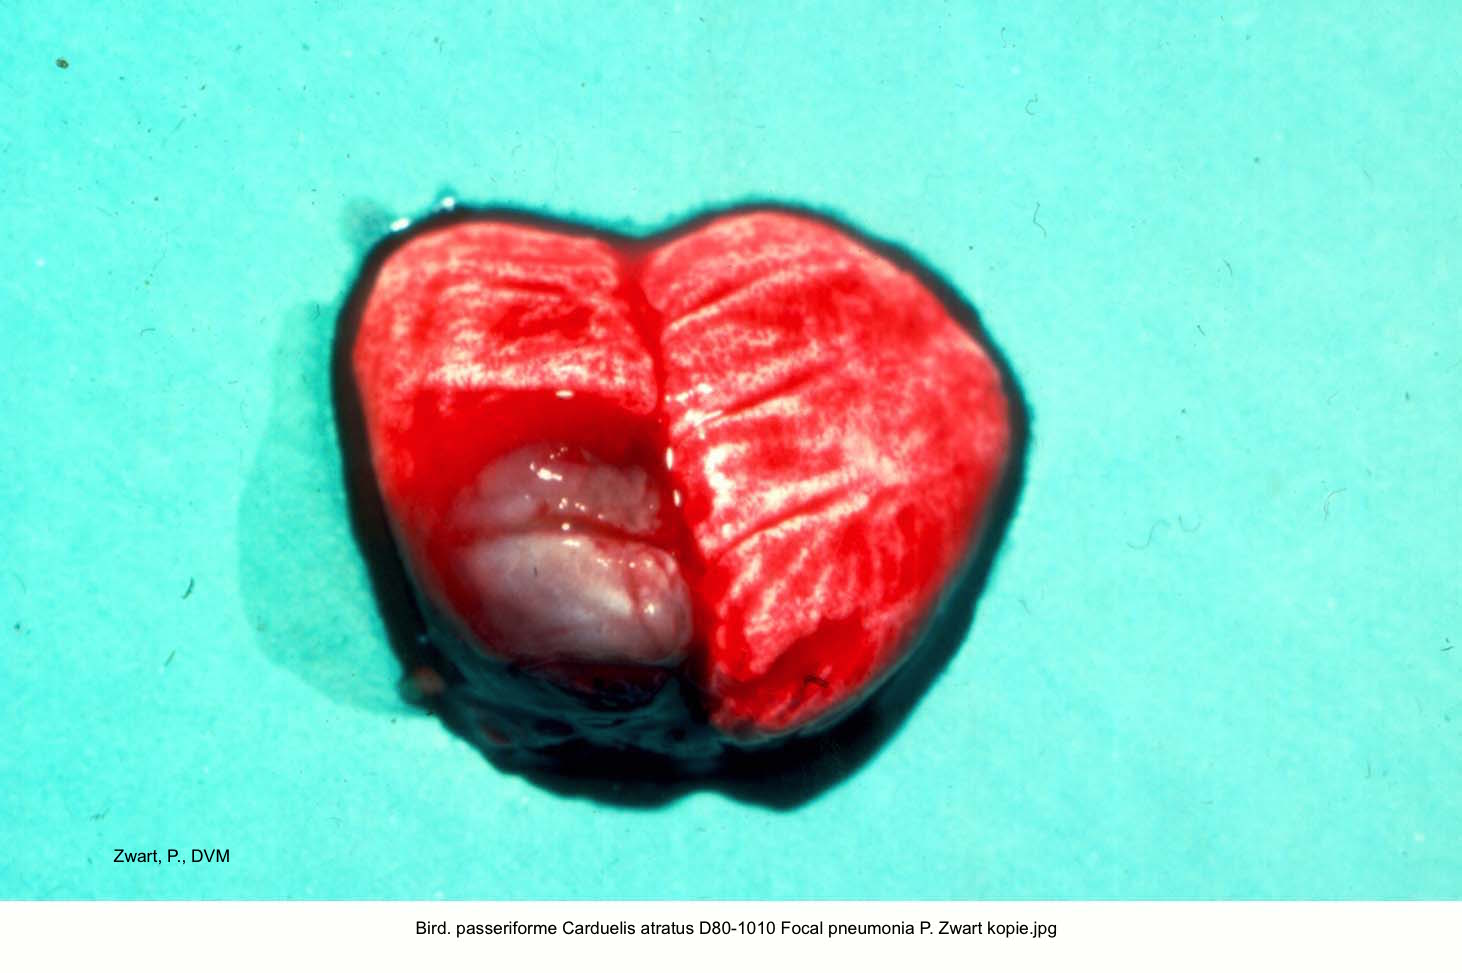 Carduelis atratus D80-1010 Focal pneumonia P. Zwart kopie